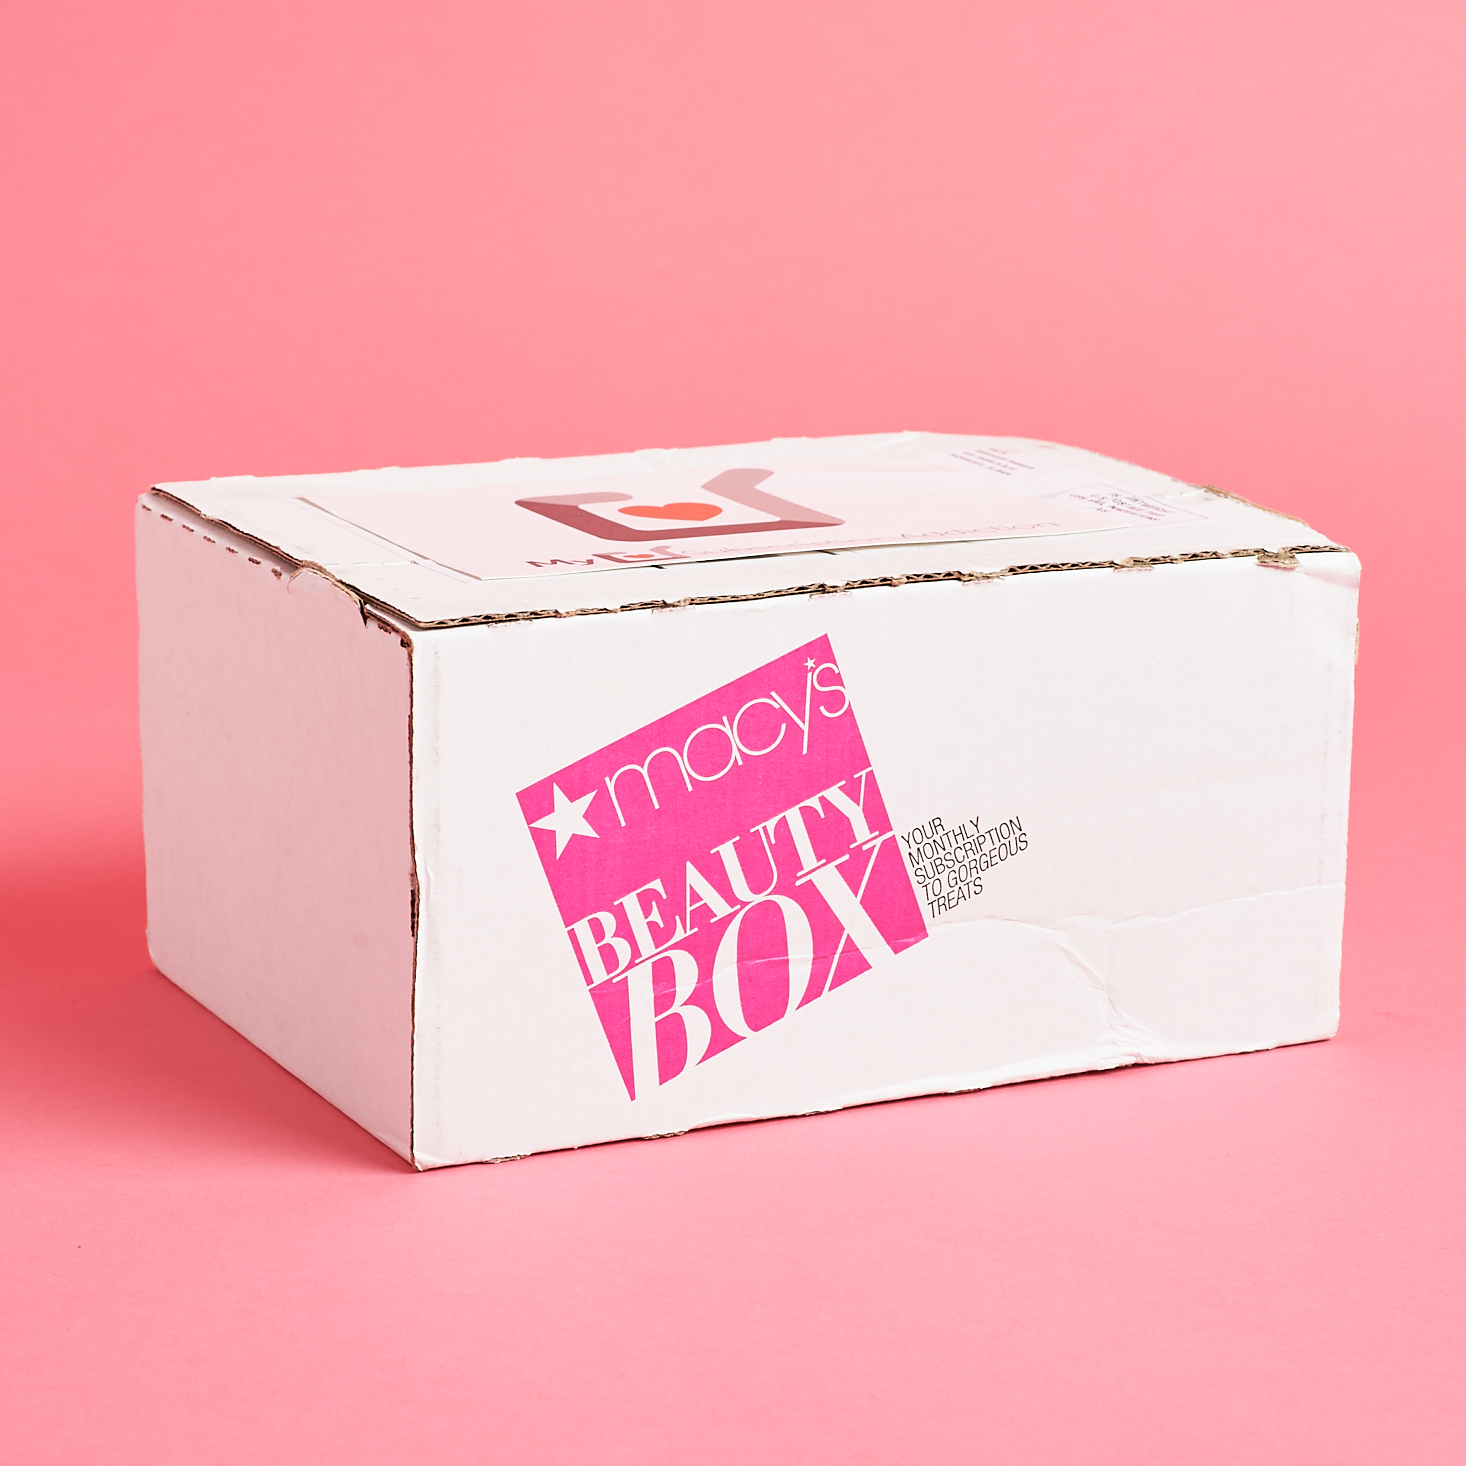 Macy’s Beauty Box Review – February 2020